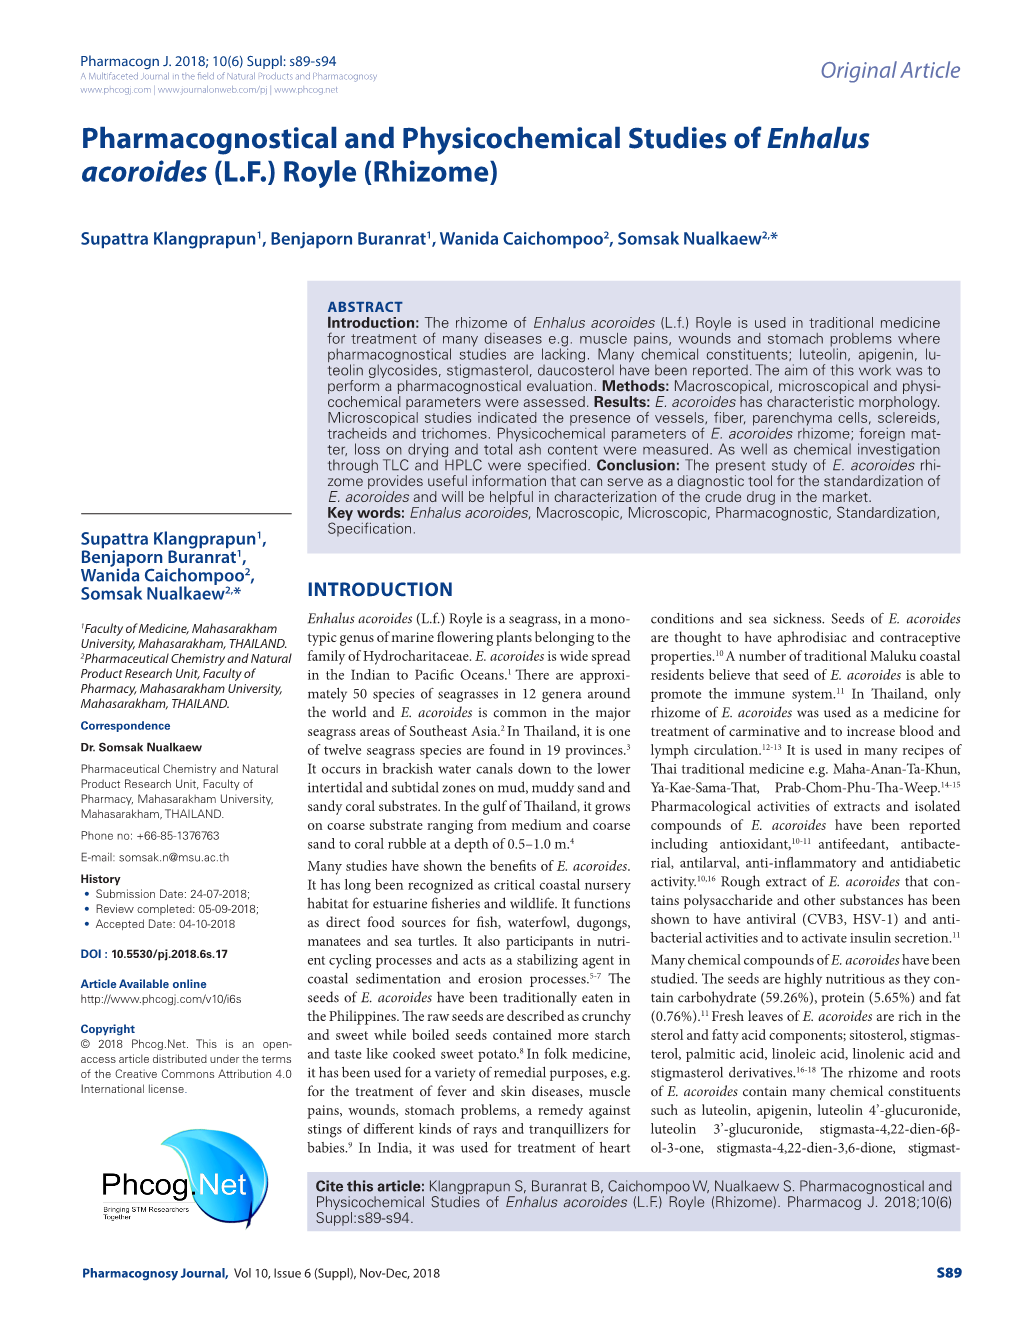 Pharmacognostical and Physicochemical Studies of Enhalus Acoroides (L.F.) Royle (Rhizome)